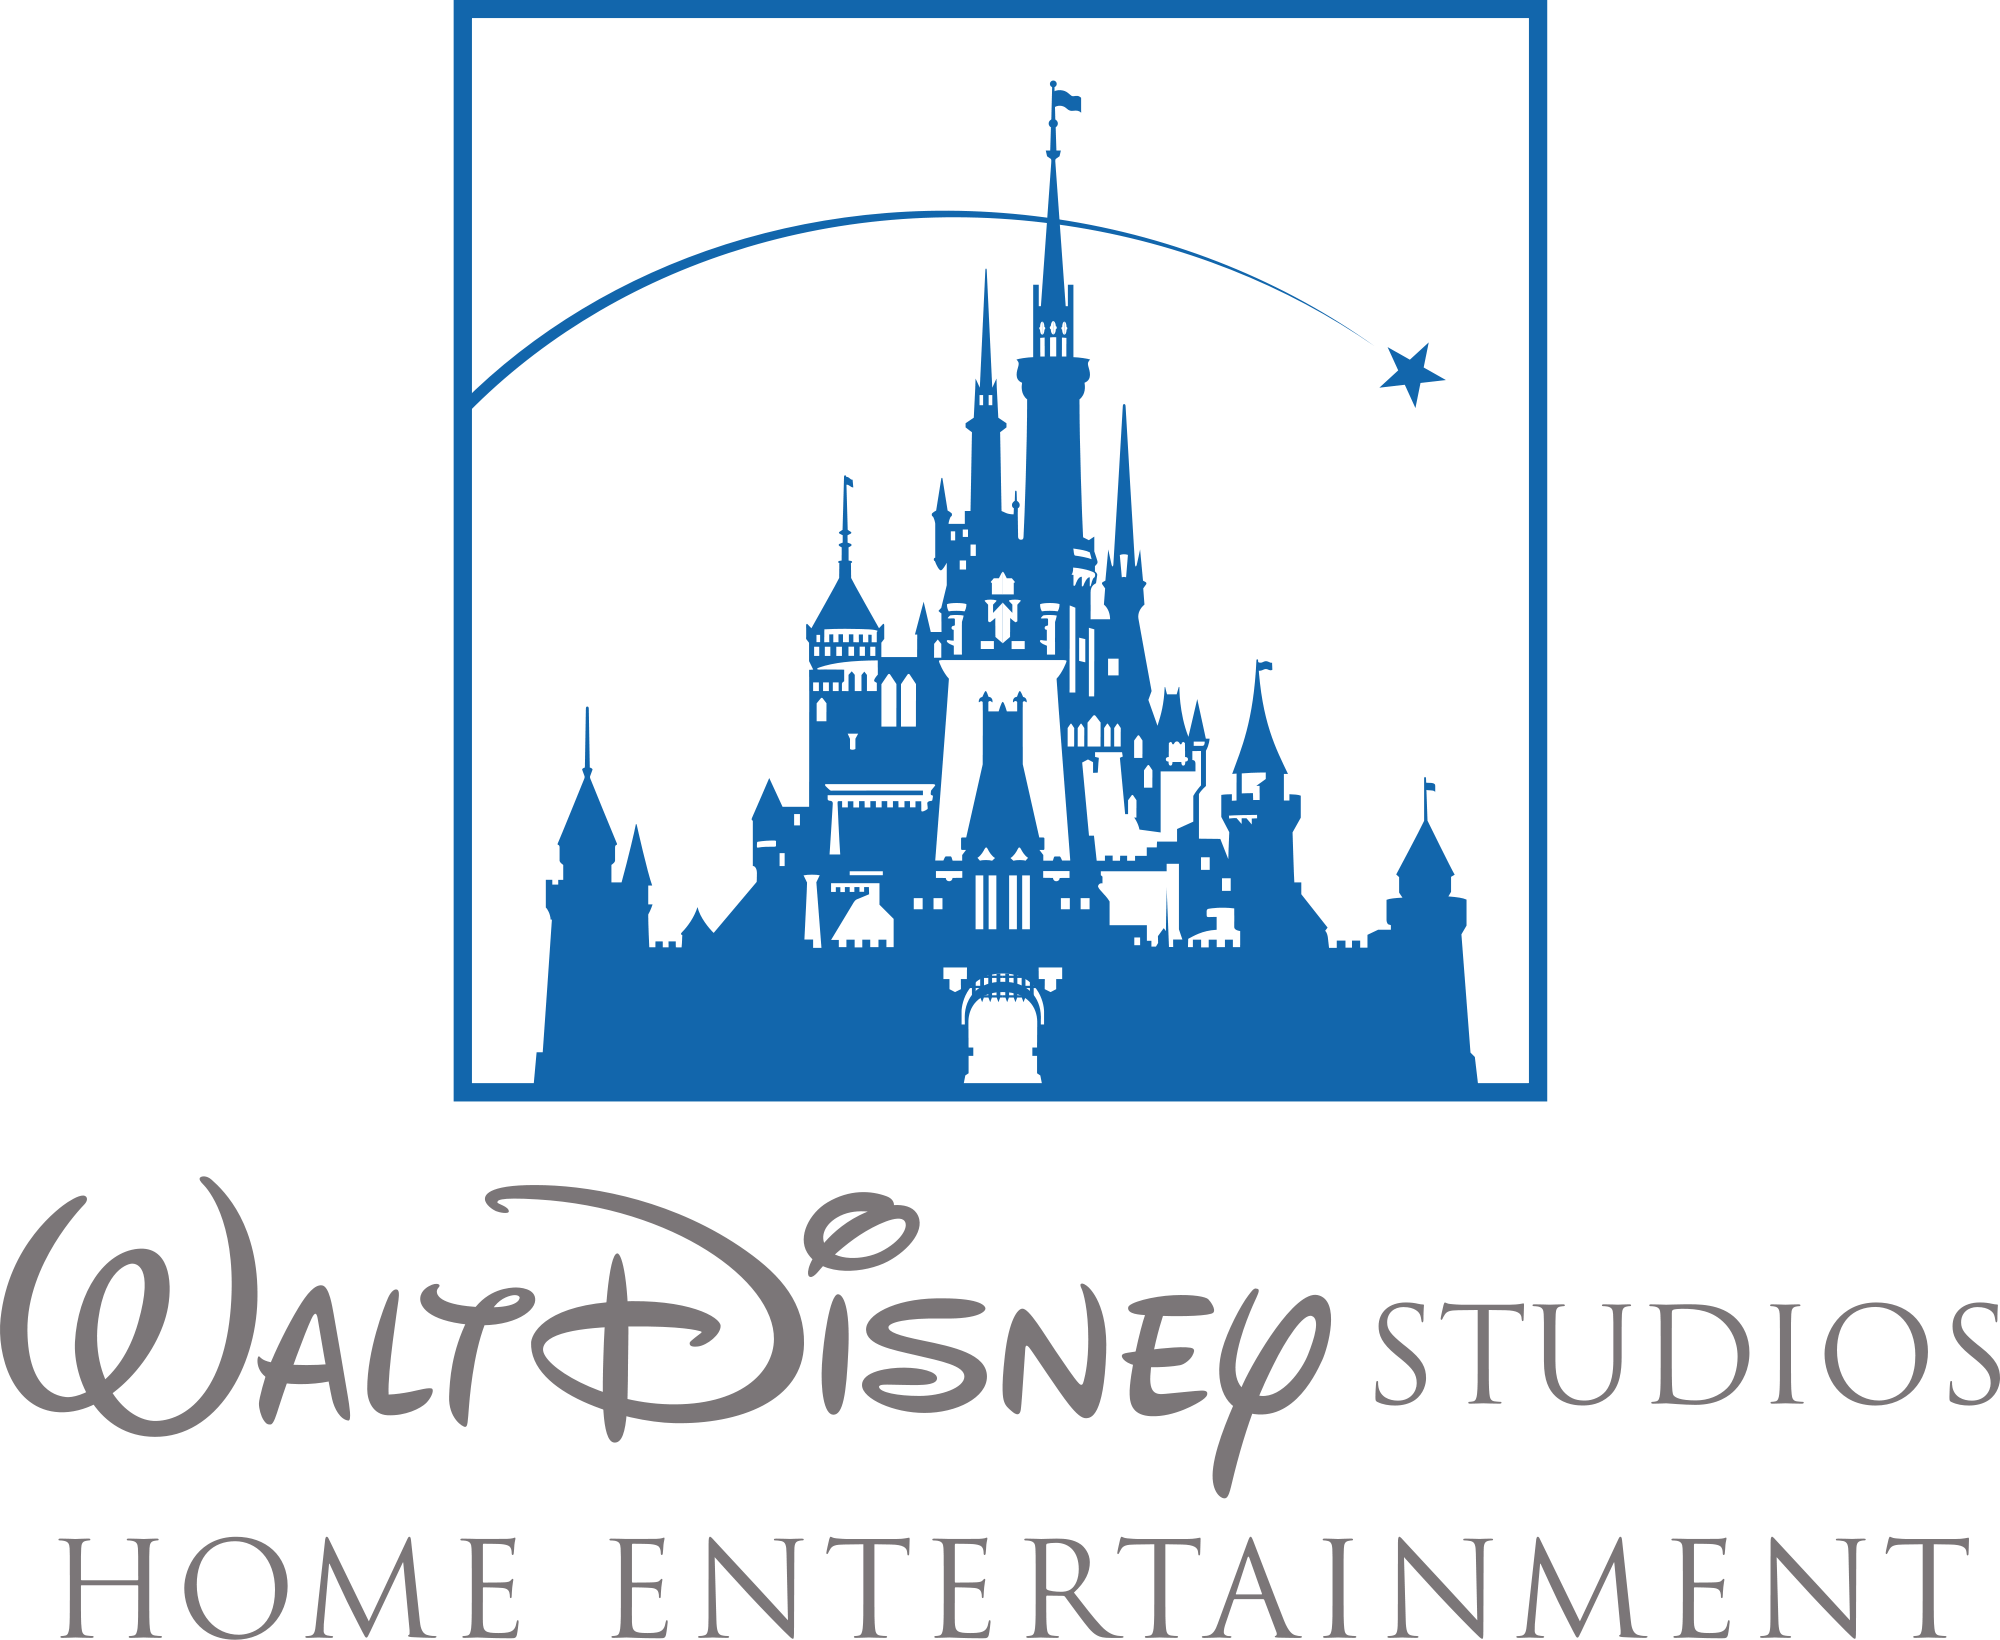 Walt Disney Studios Logo - Image - 2000px-Walt Disney Studios Home Entertainment logo.png ...